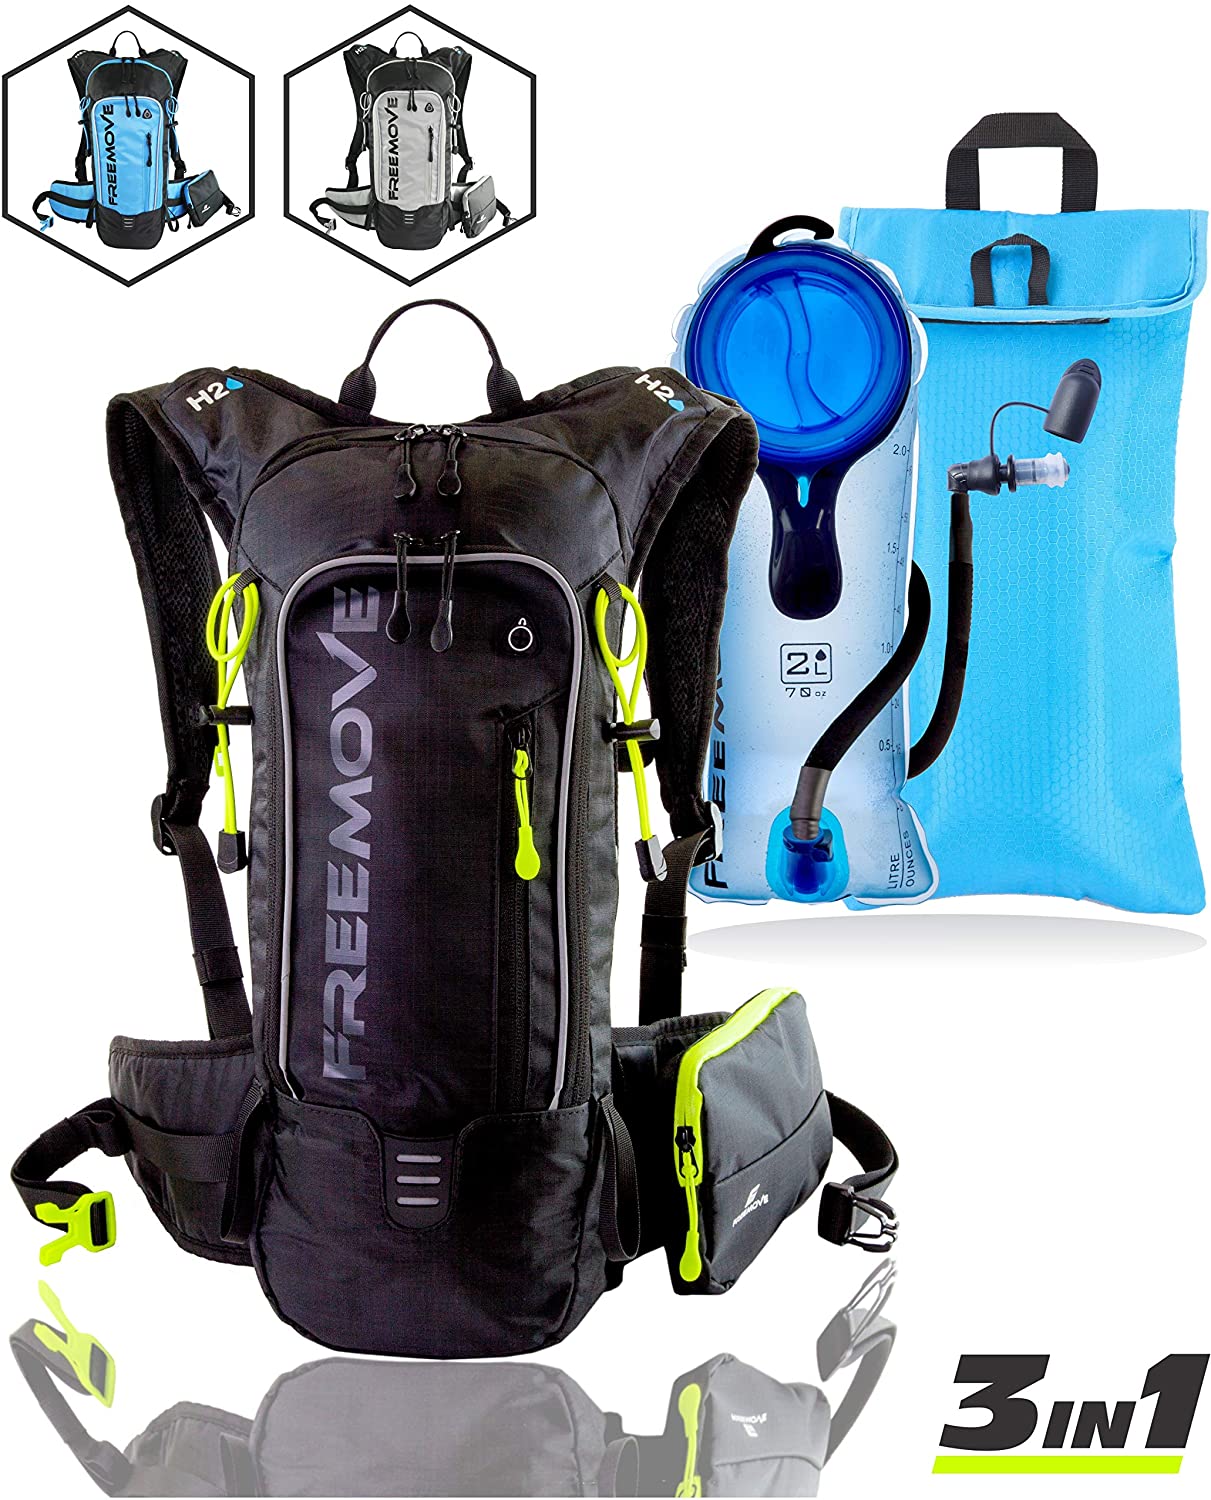 FREEMOVE Water Bladder & Cooler Bag Fully Adjustable Hydration Pack